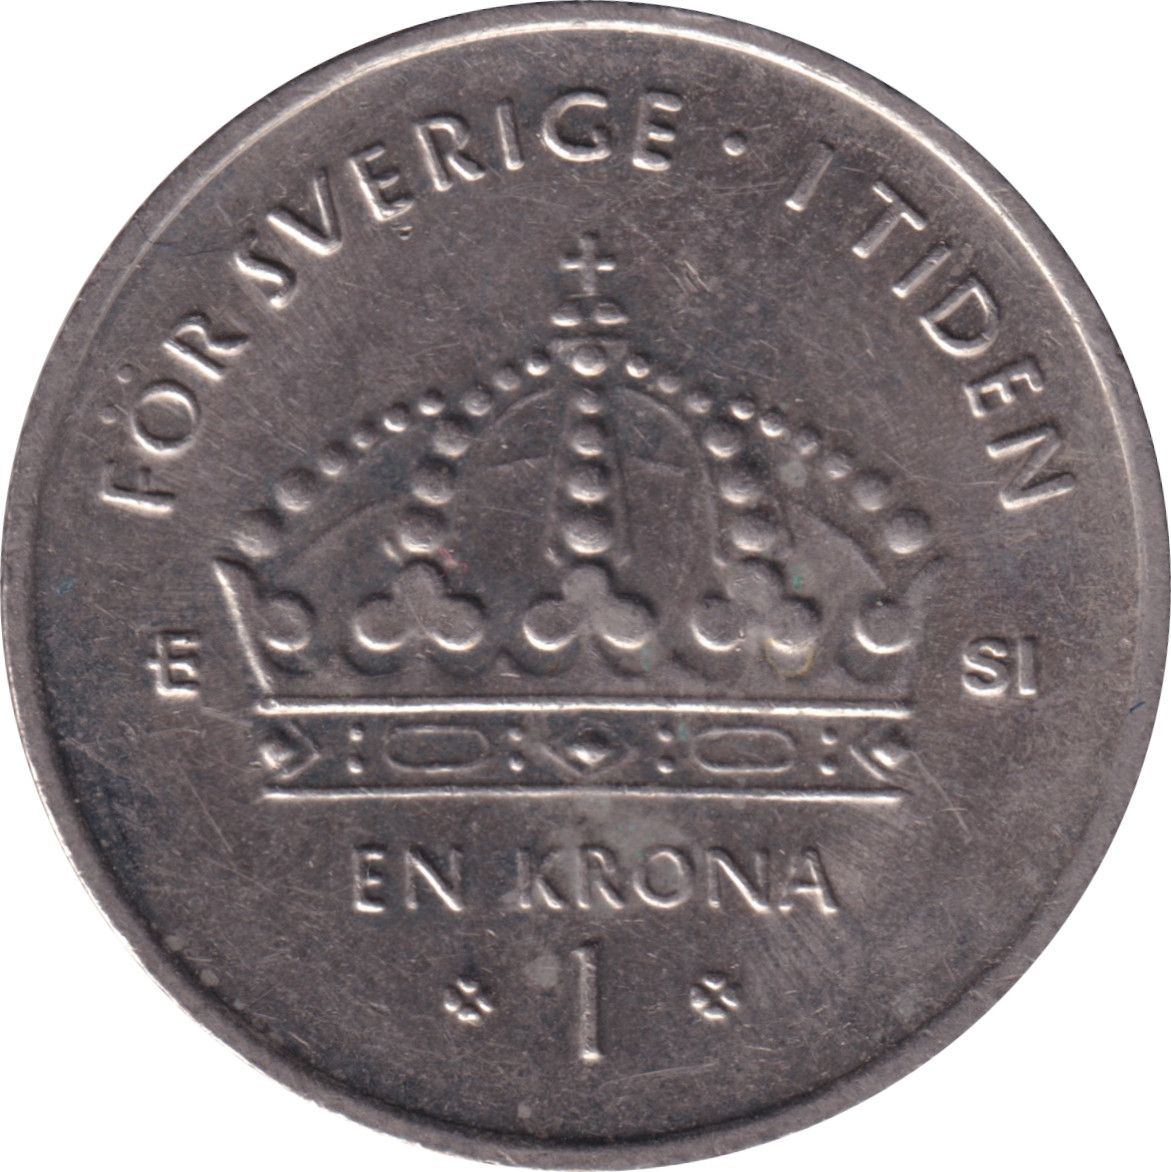 1 krona - Charles XVI - Old head